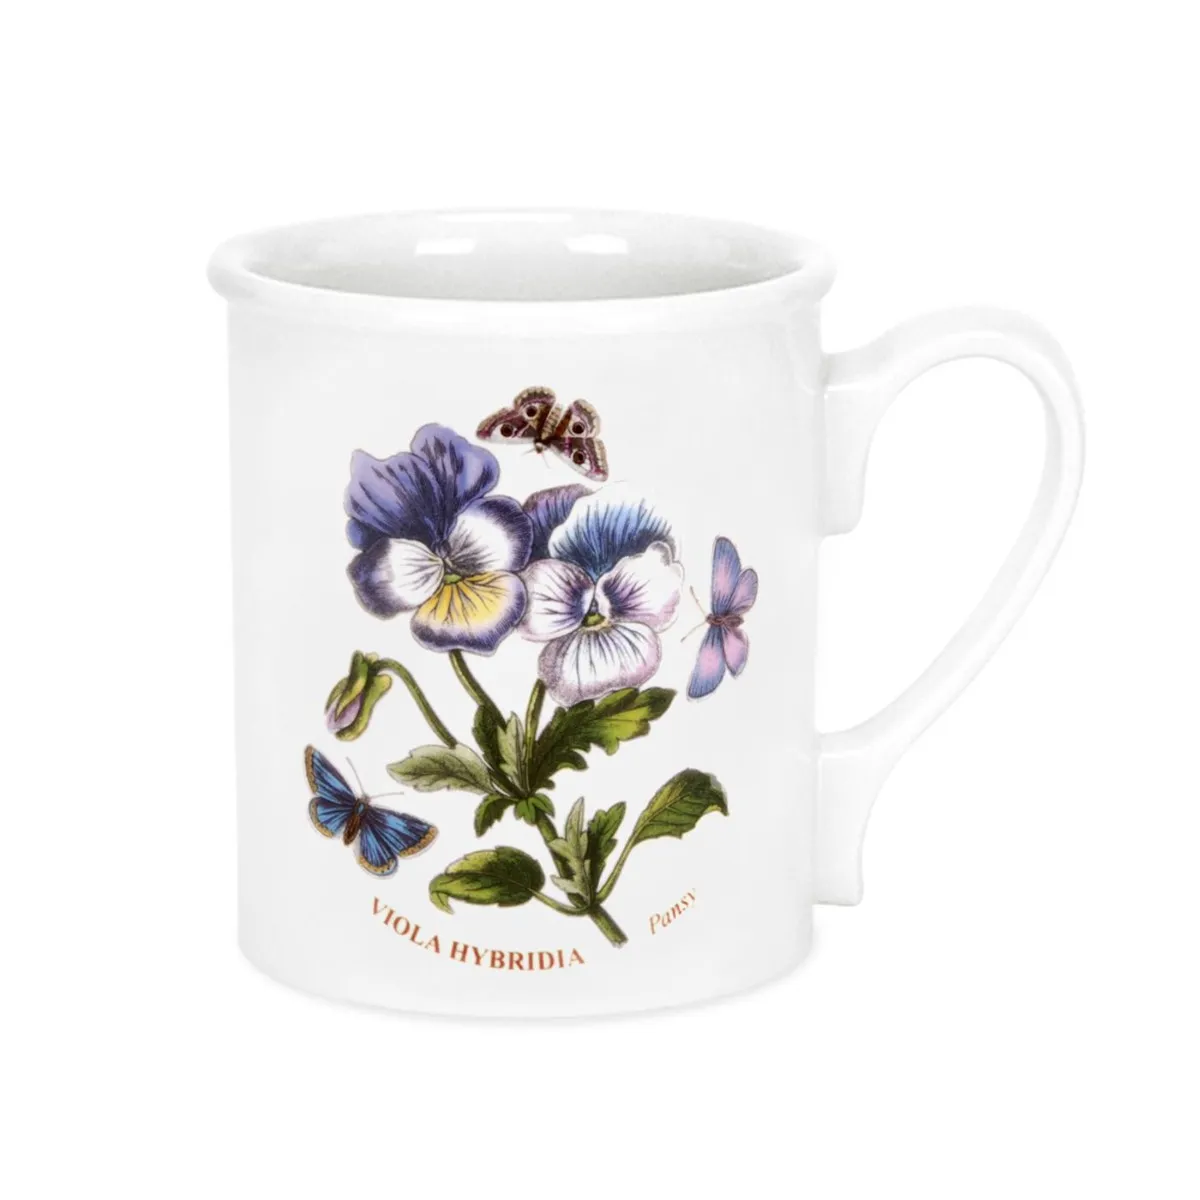 SECONDS Botanic Garden Breakfast Mug 9oz - No Guarantee of Flower Design